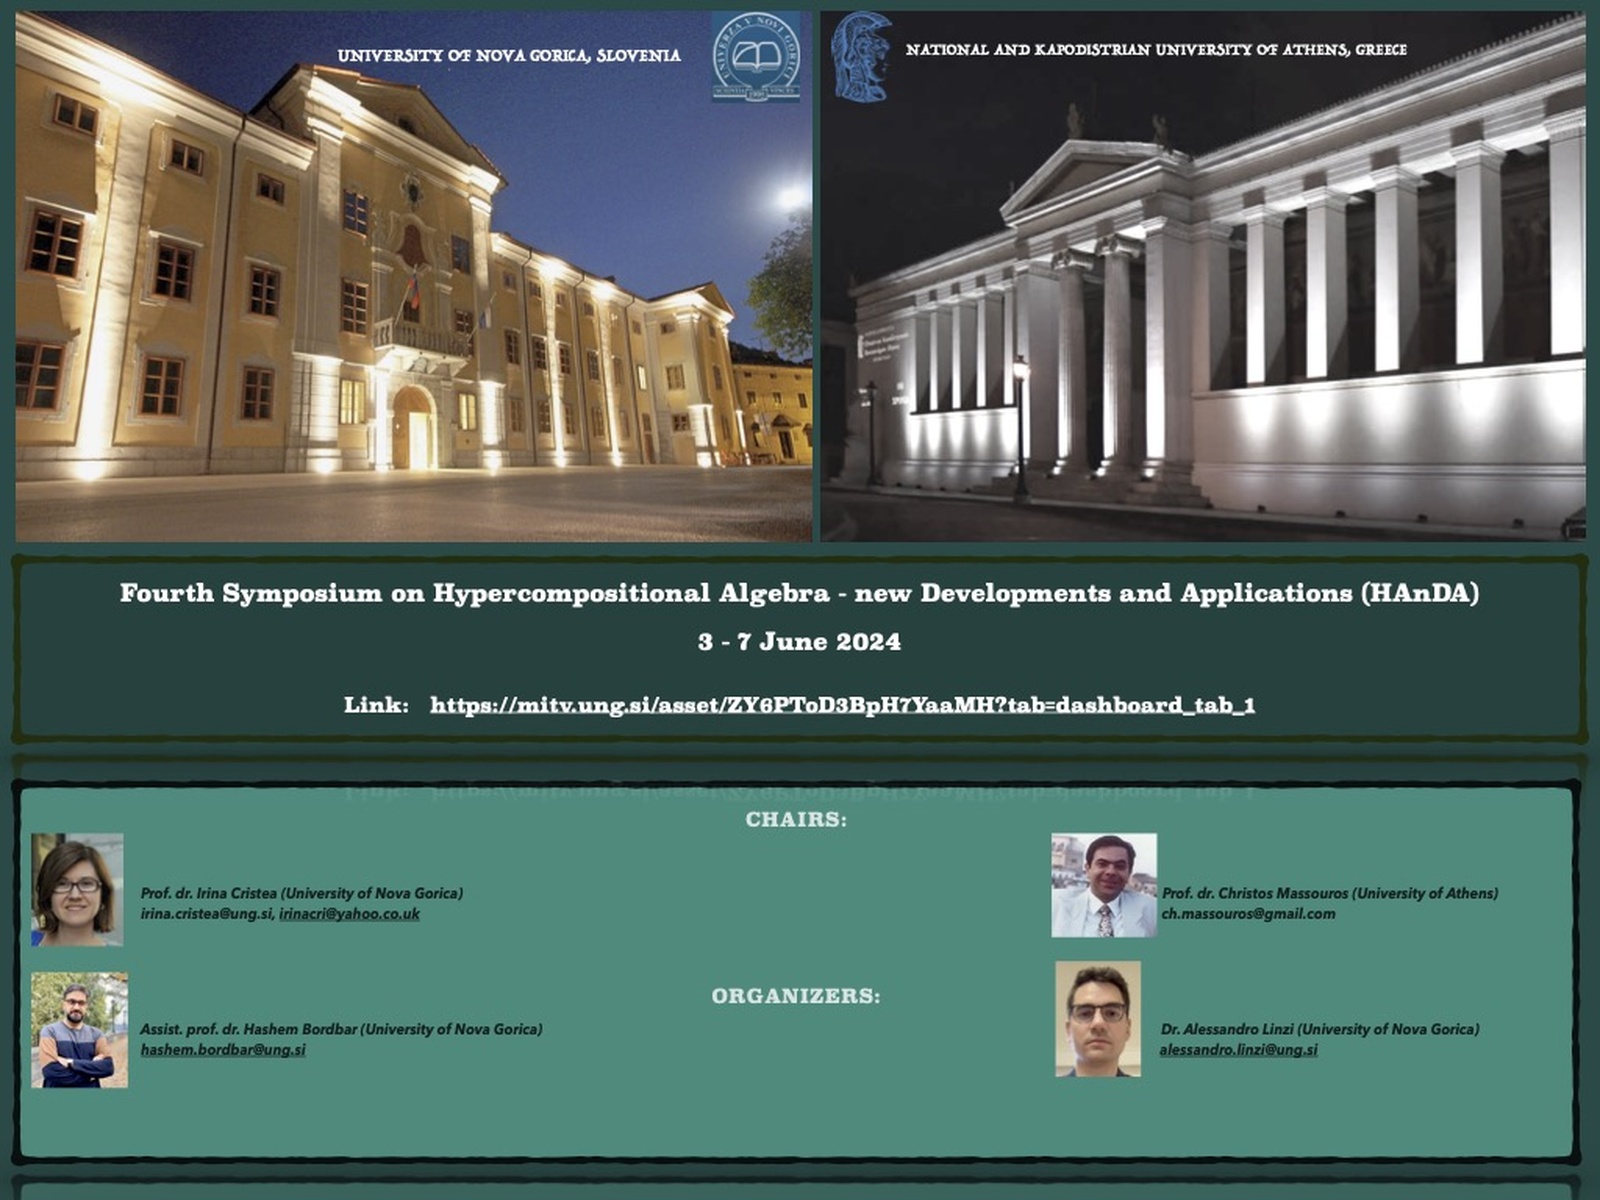 Symposium on “Hypercompositional Algebra – new Developments and Applications (HAnDA)”